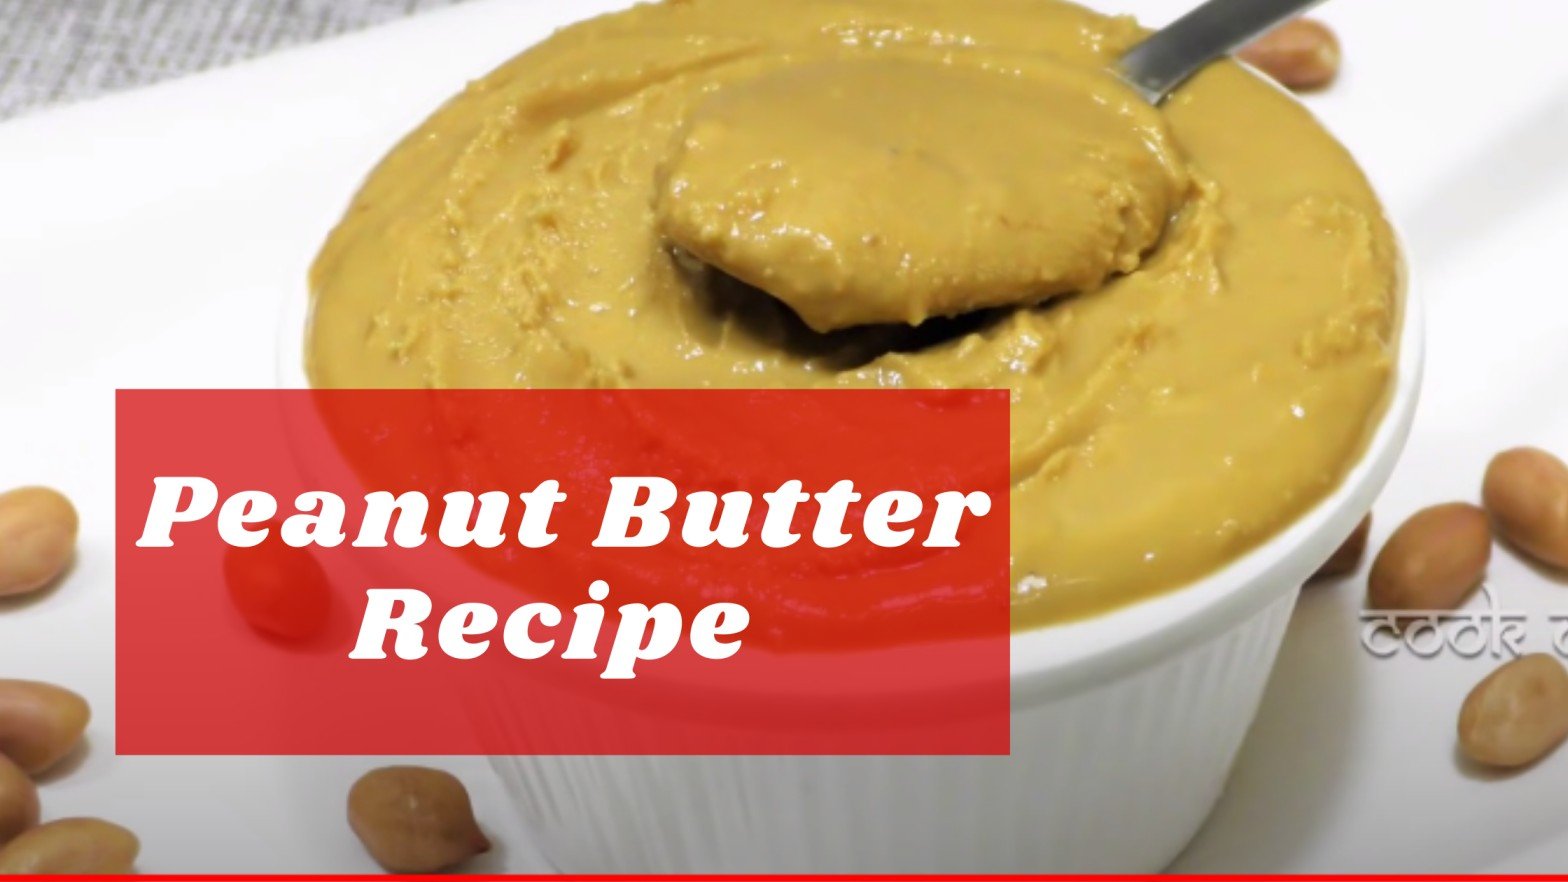 Peanut Butter Recipe  How to make Peanut Butter at Home  Homemade Peanut  Butter Recipe